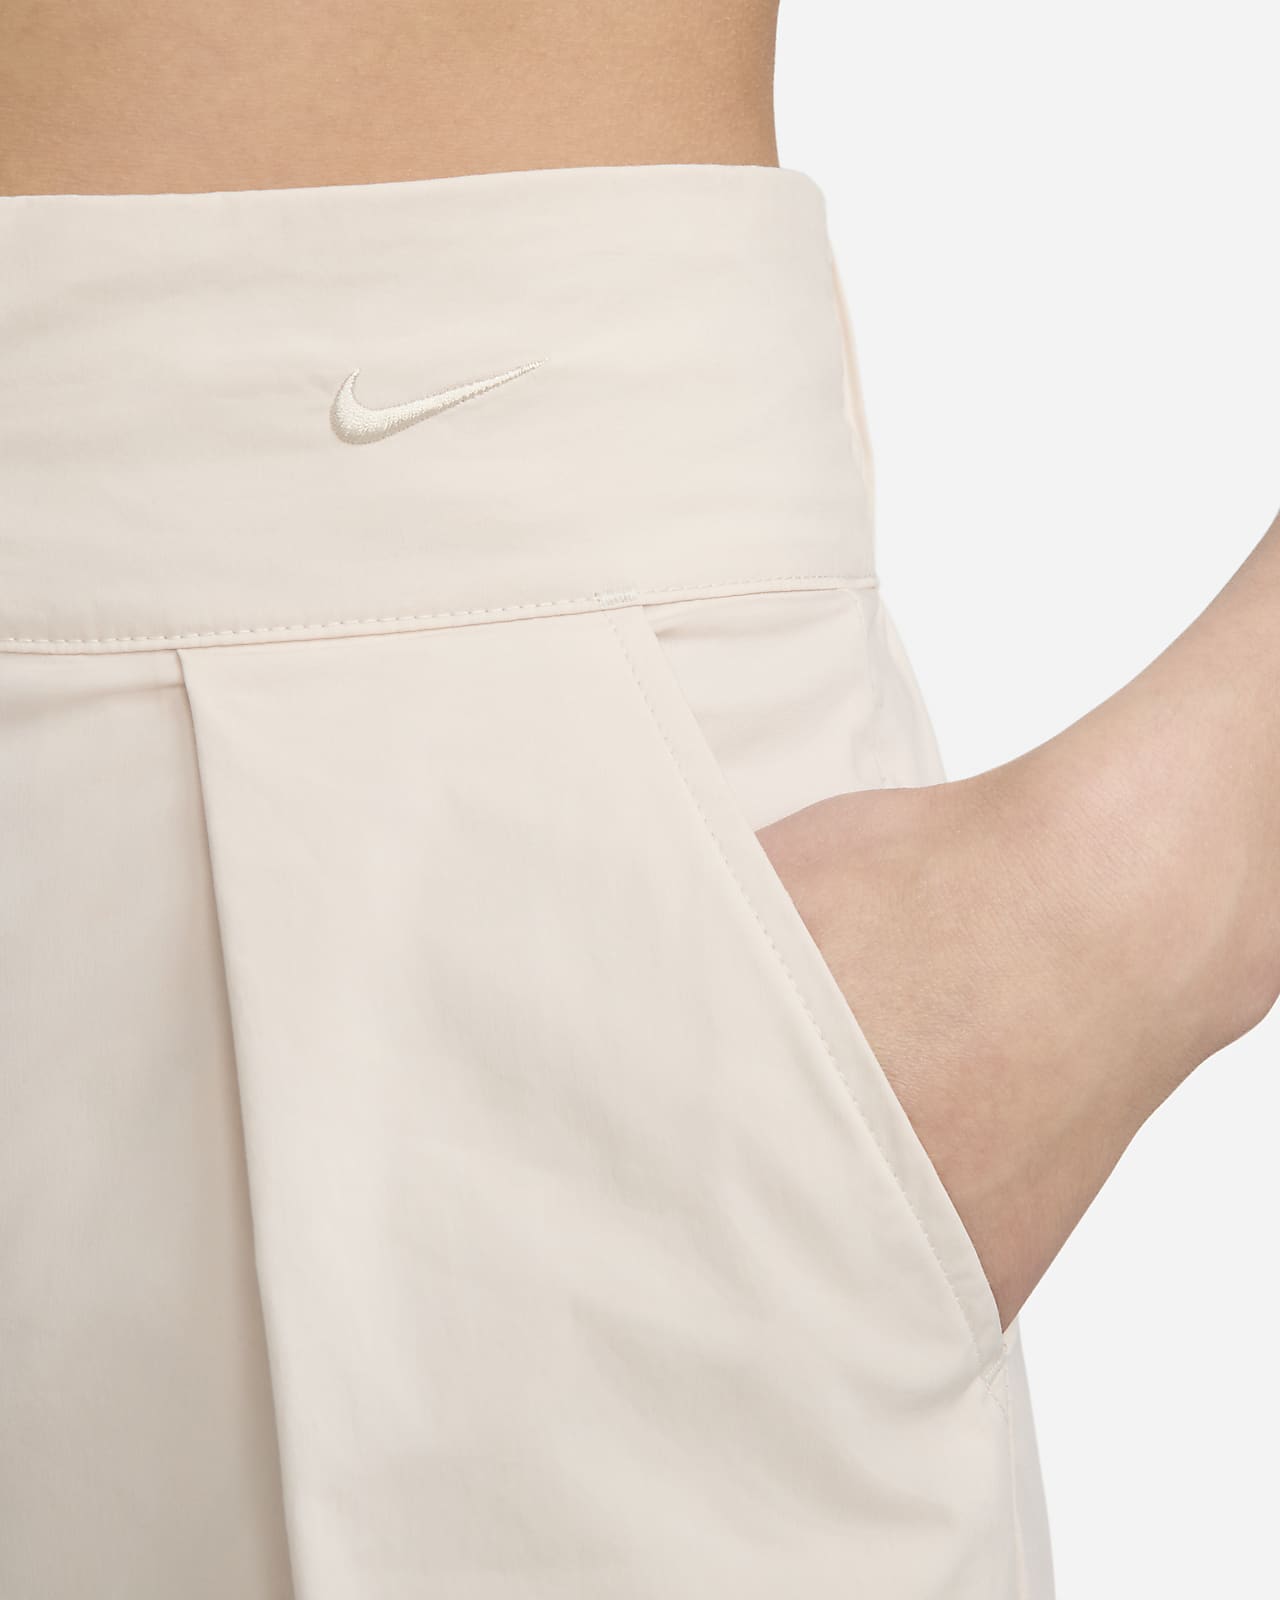 Pants de tejido Woven para mujer Nike Sportswear Collection